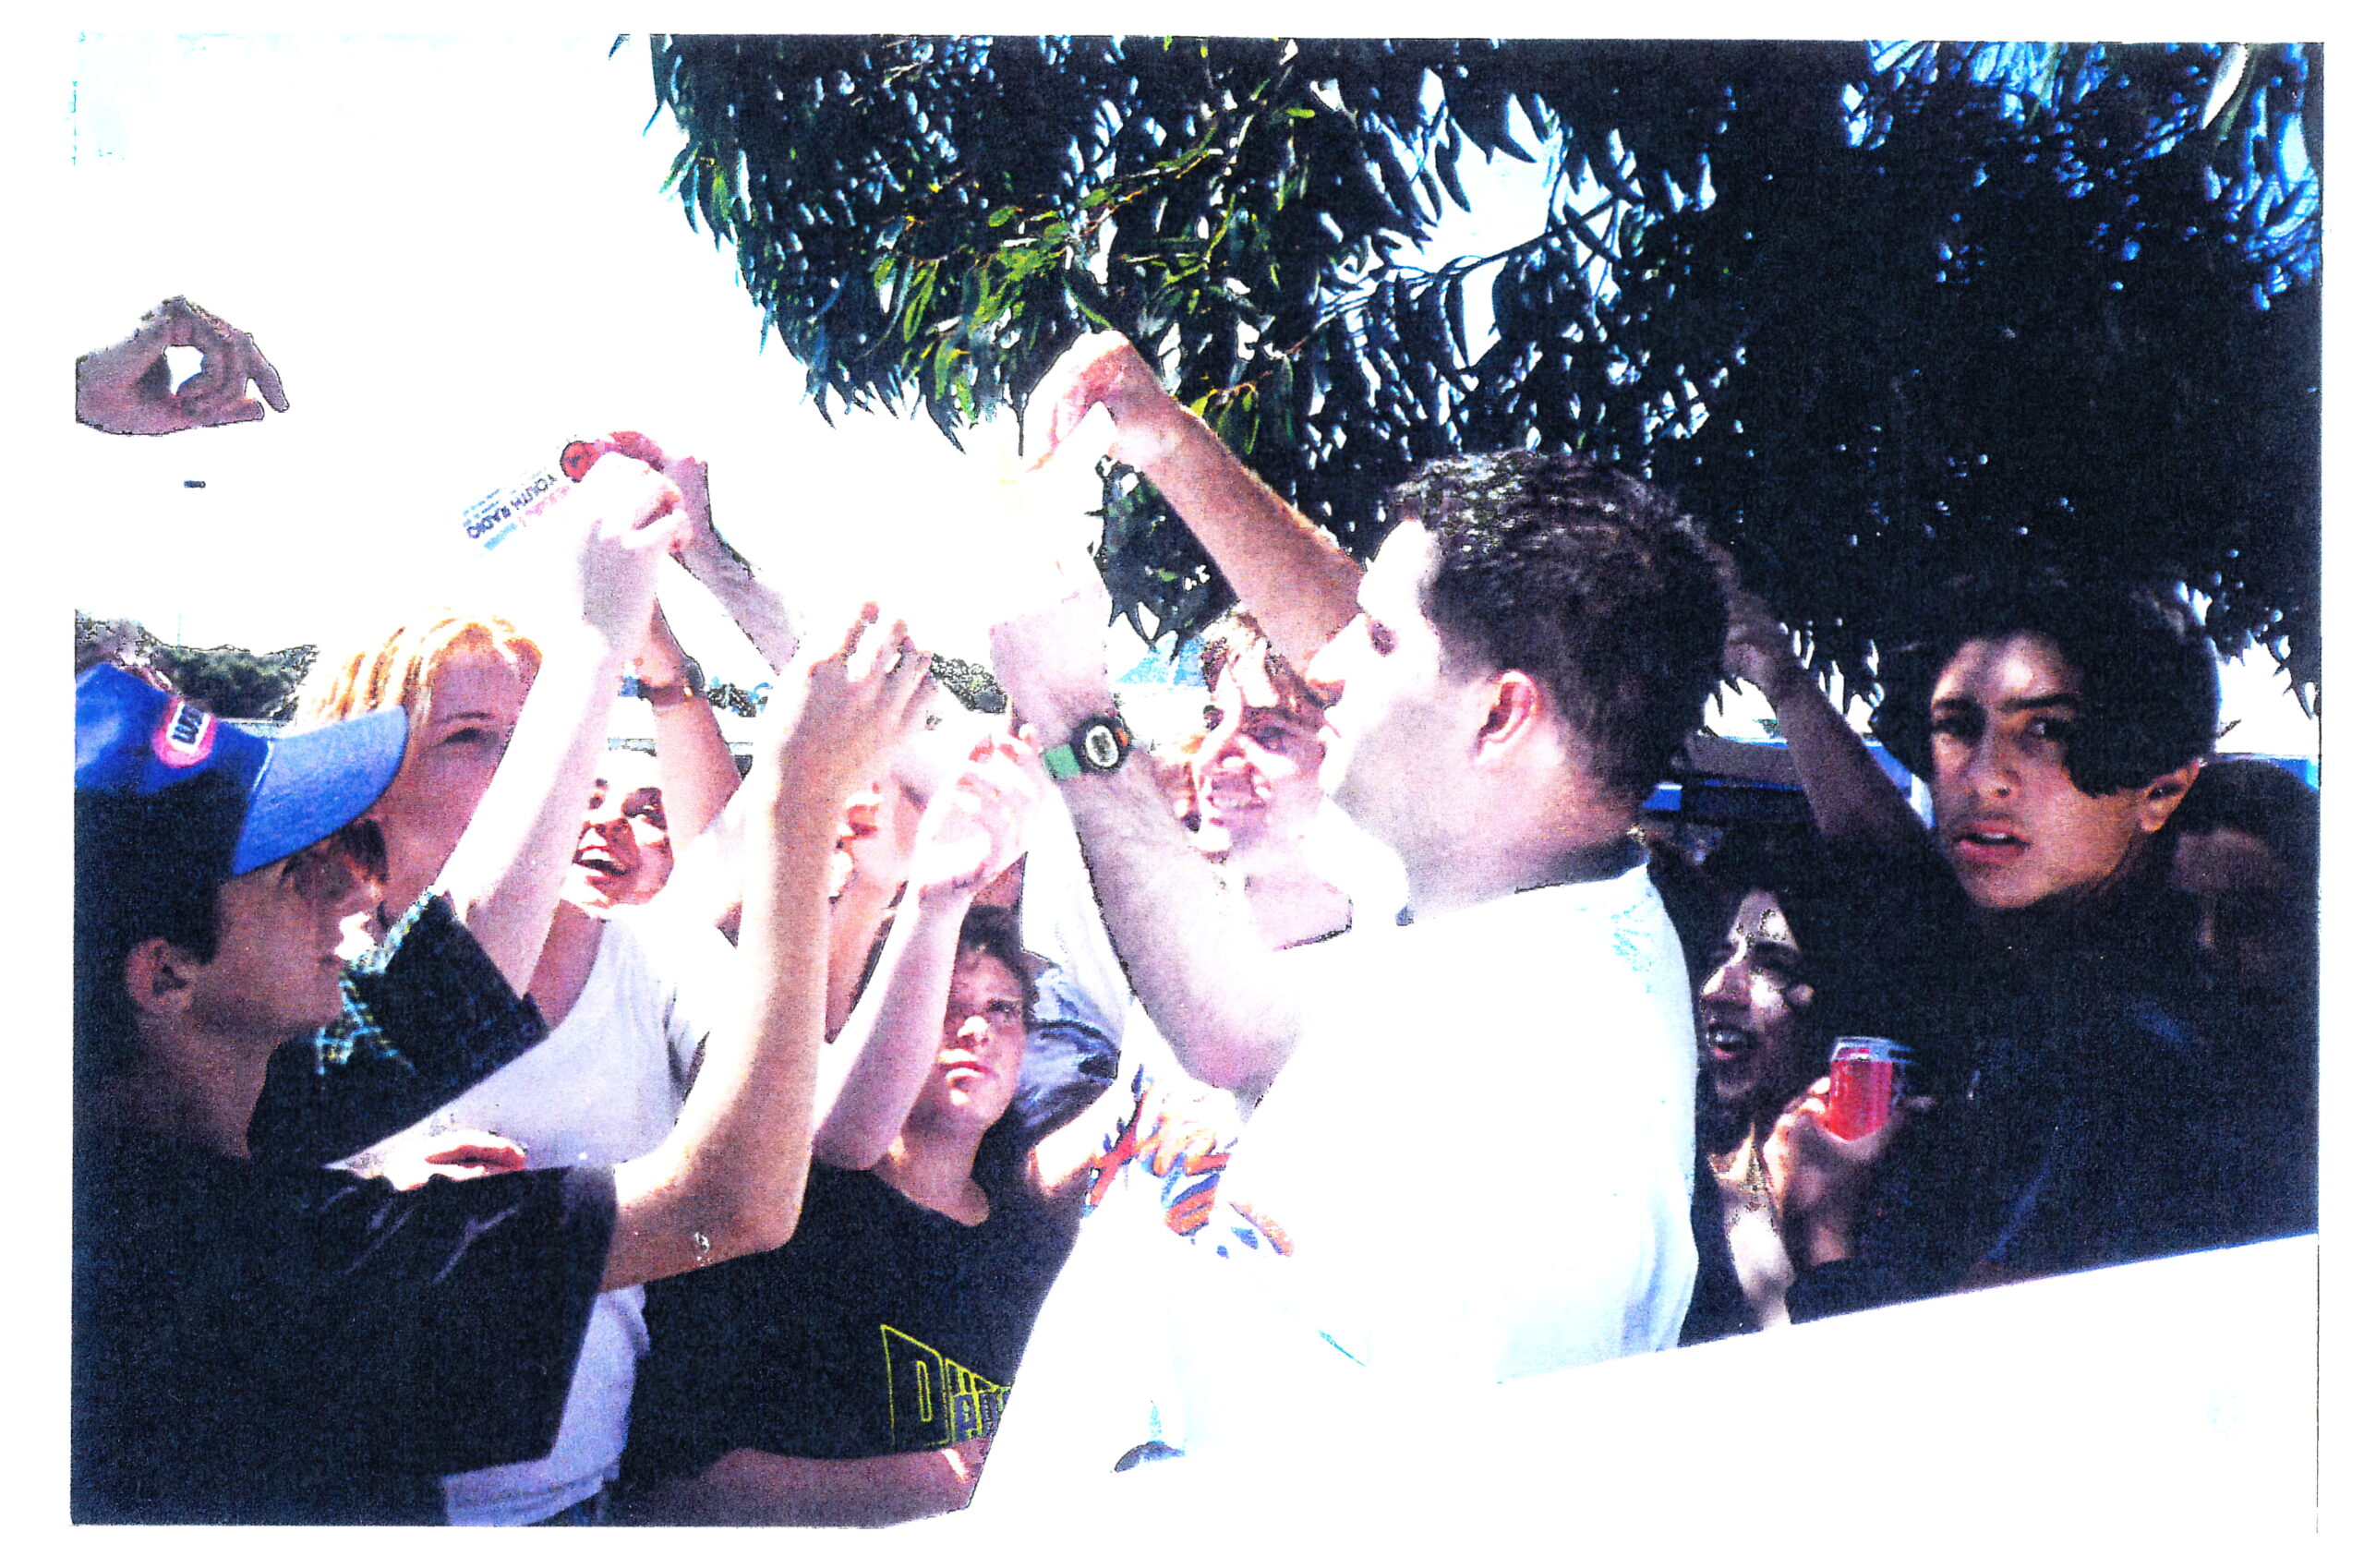 Nick Karlas giving out freebies at Northcote Plaza (mid 90s)